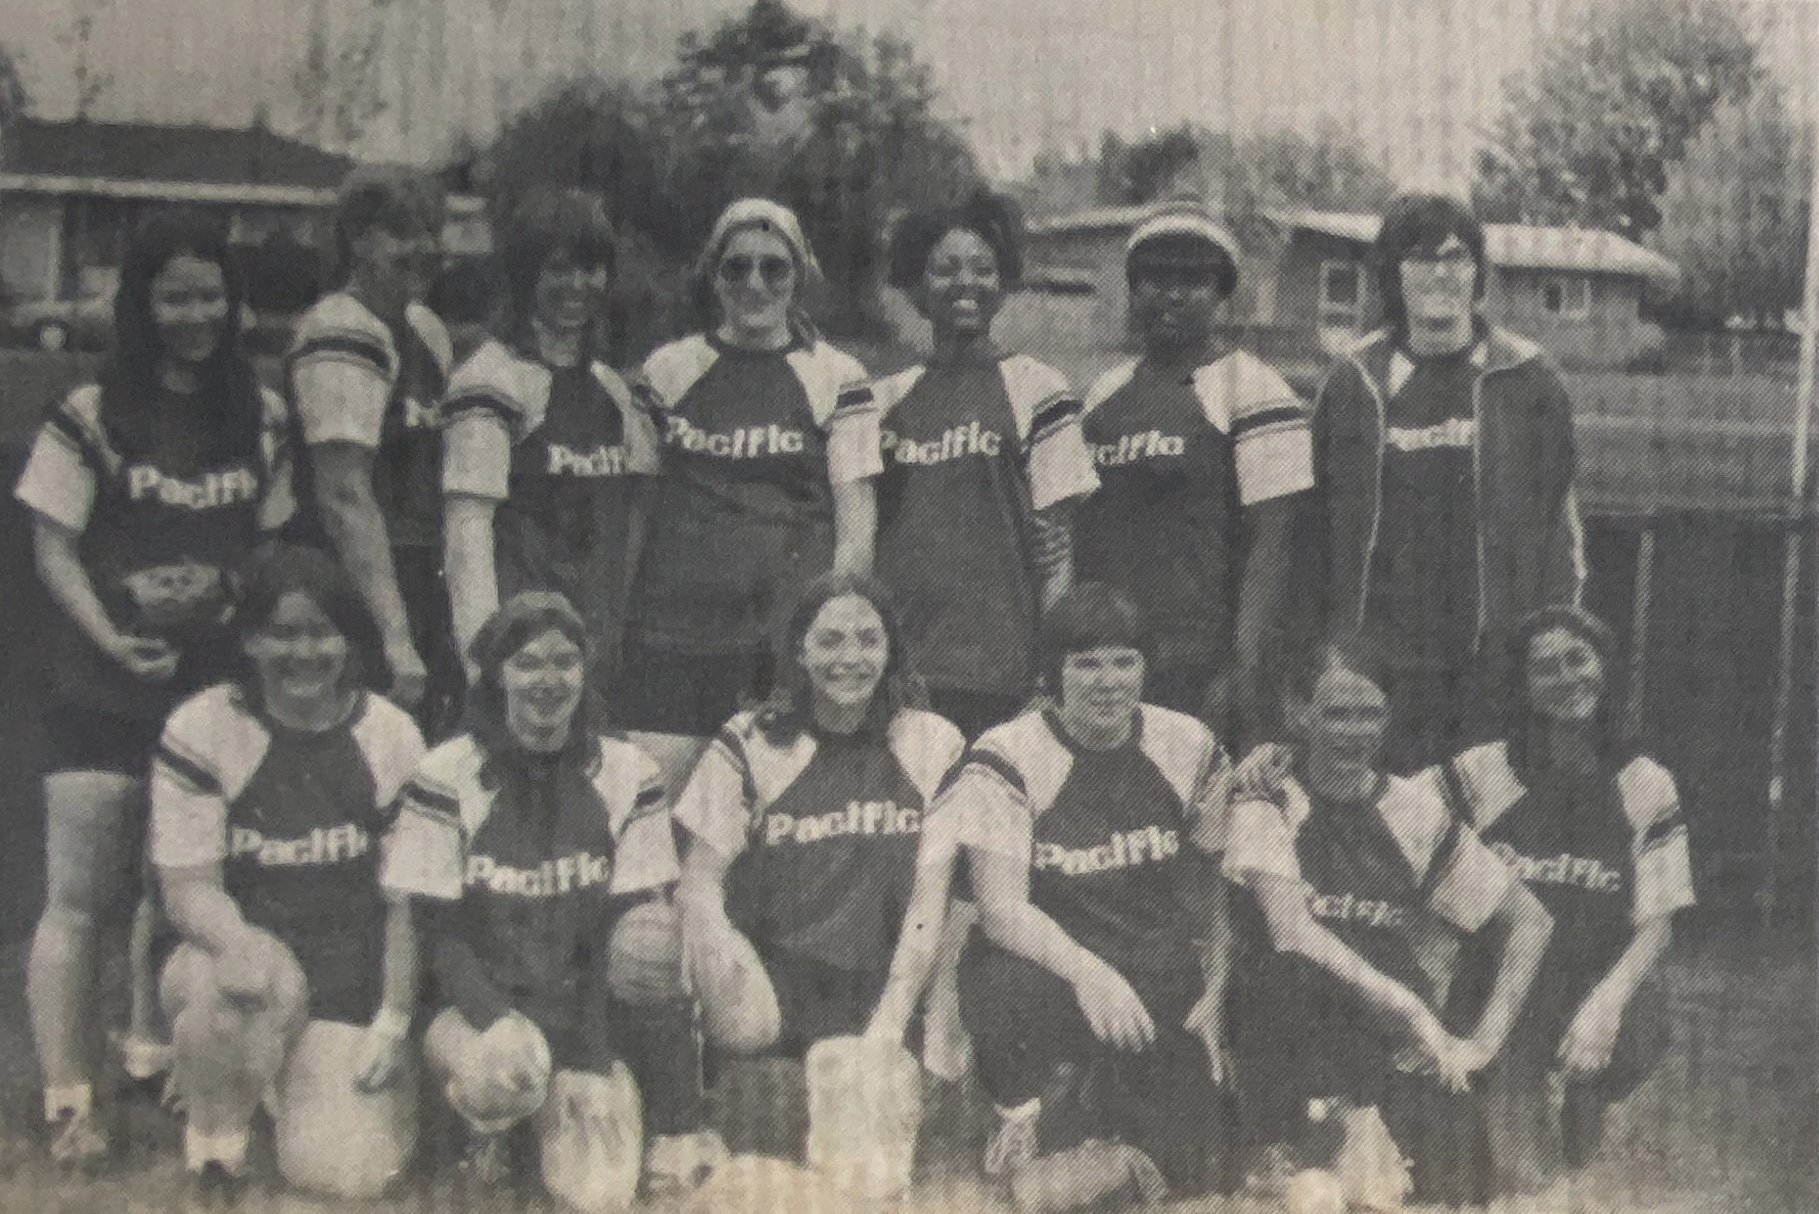 1974 Pacific softball team